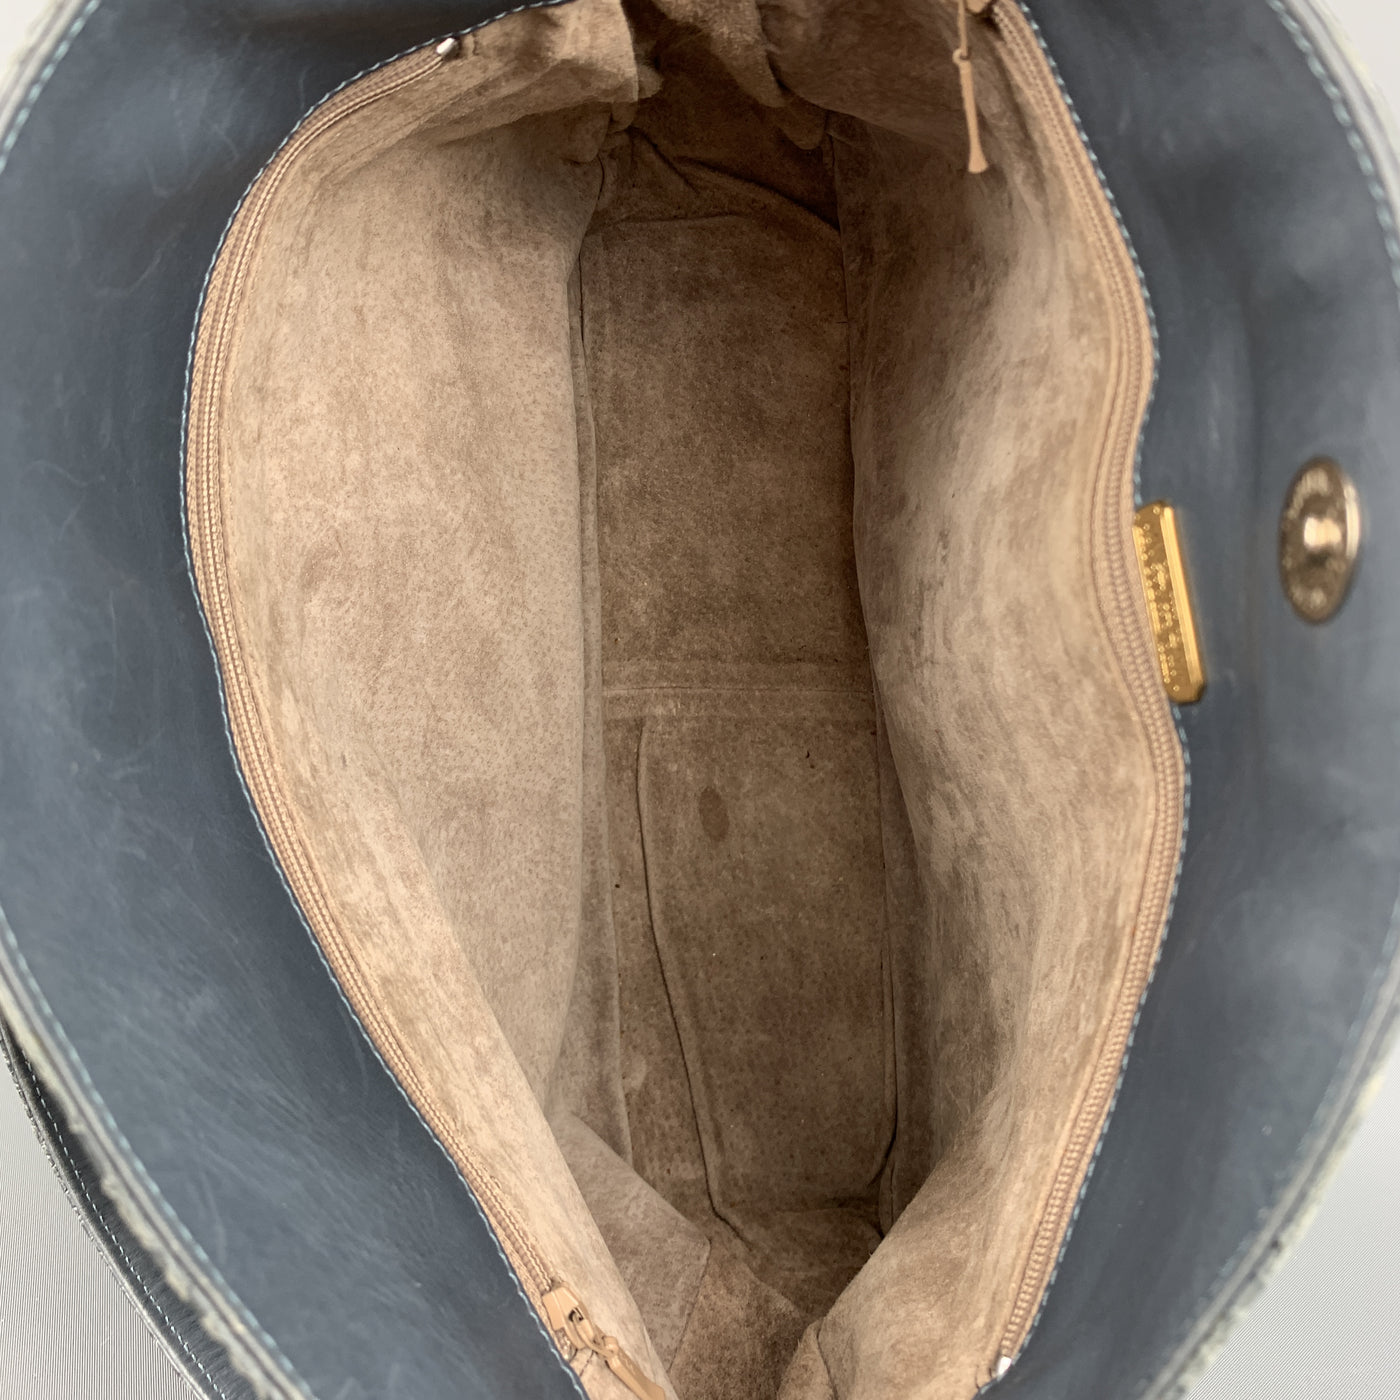 Muted Blue Grey Crocodile Skin Leather Top Handle Handbag